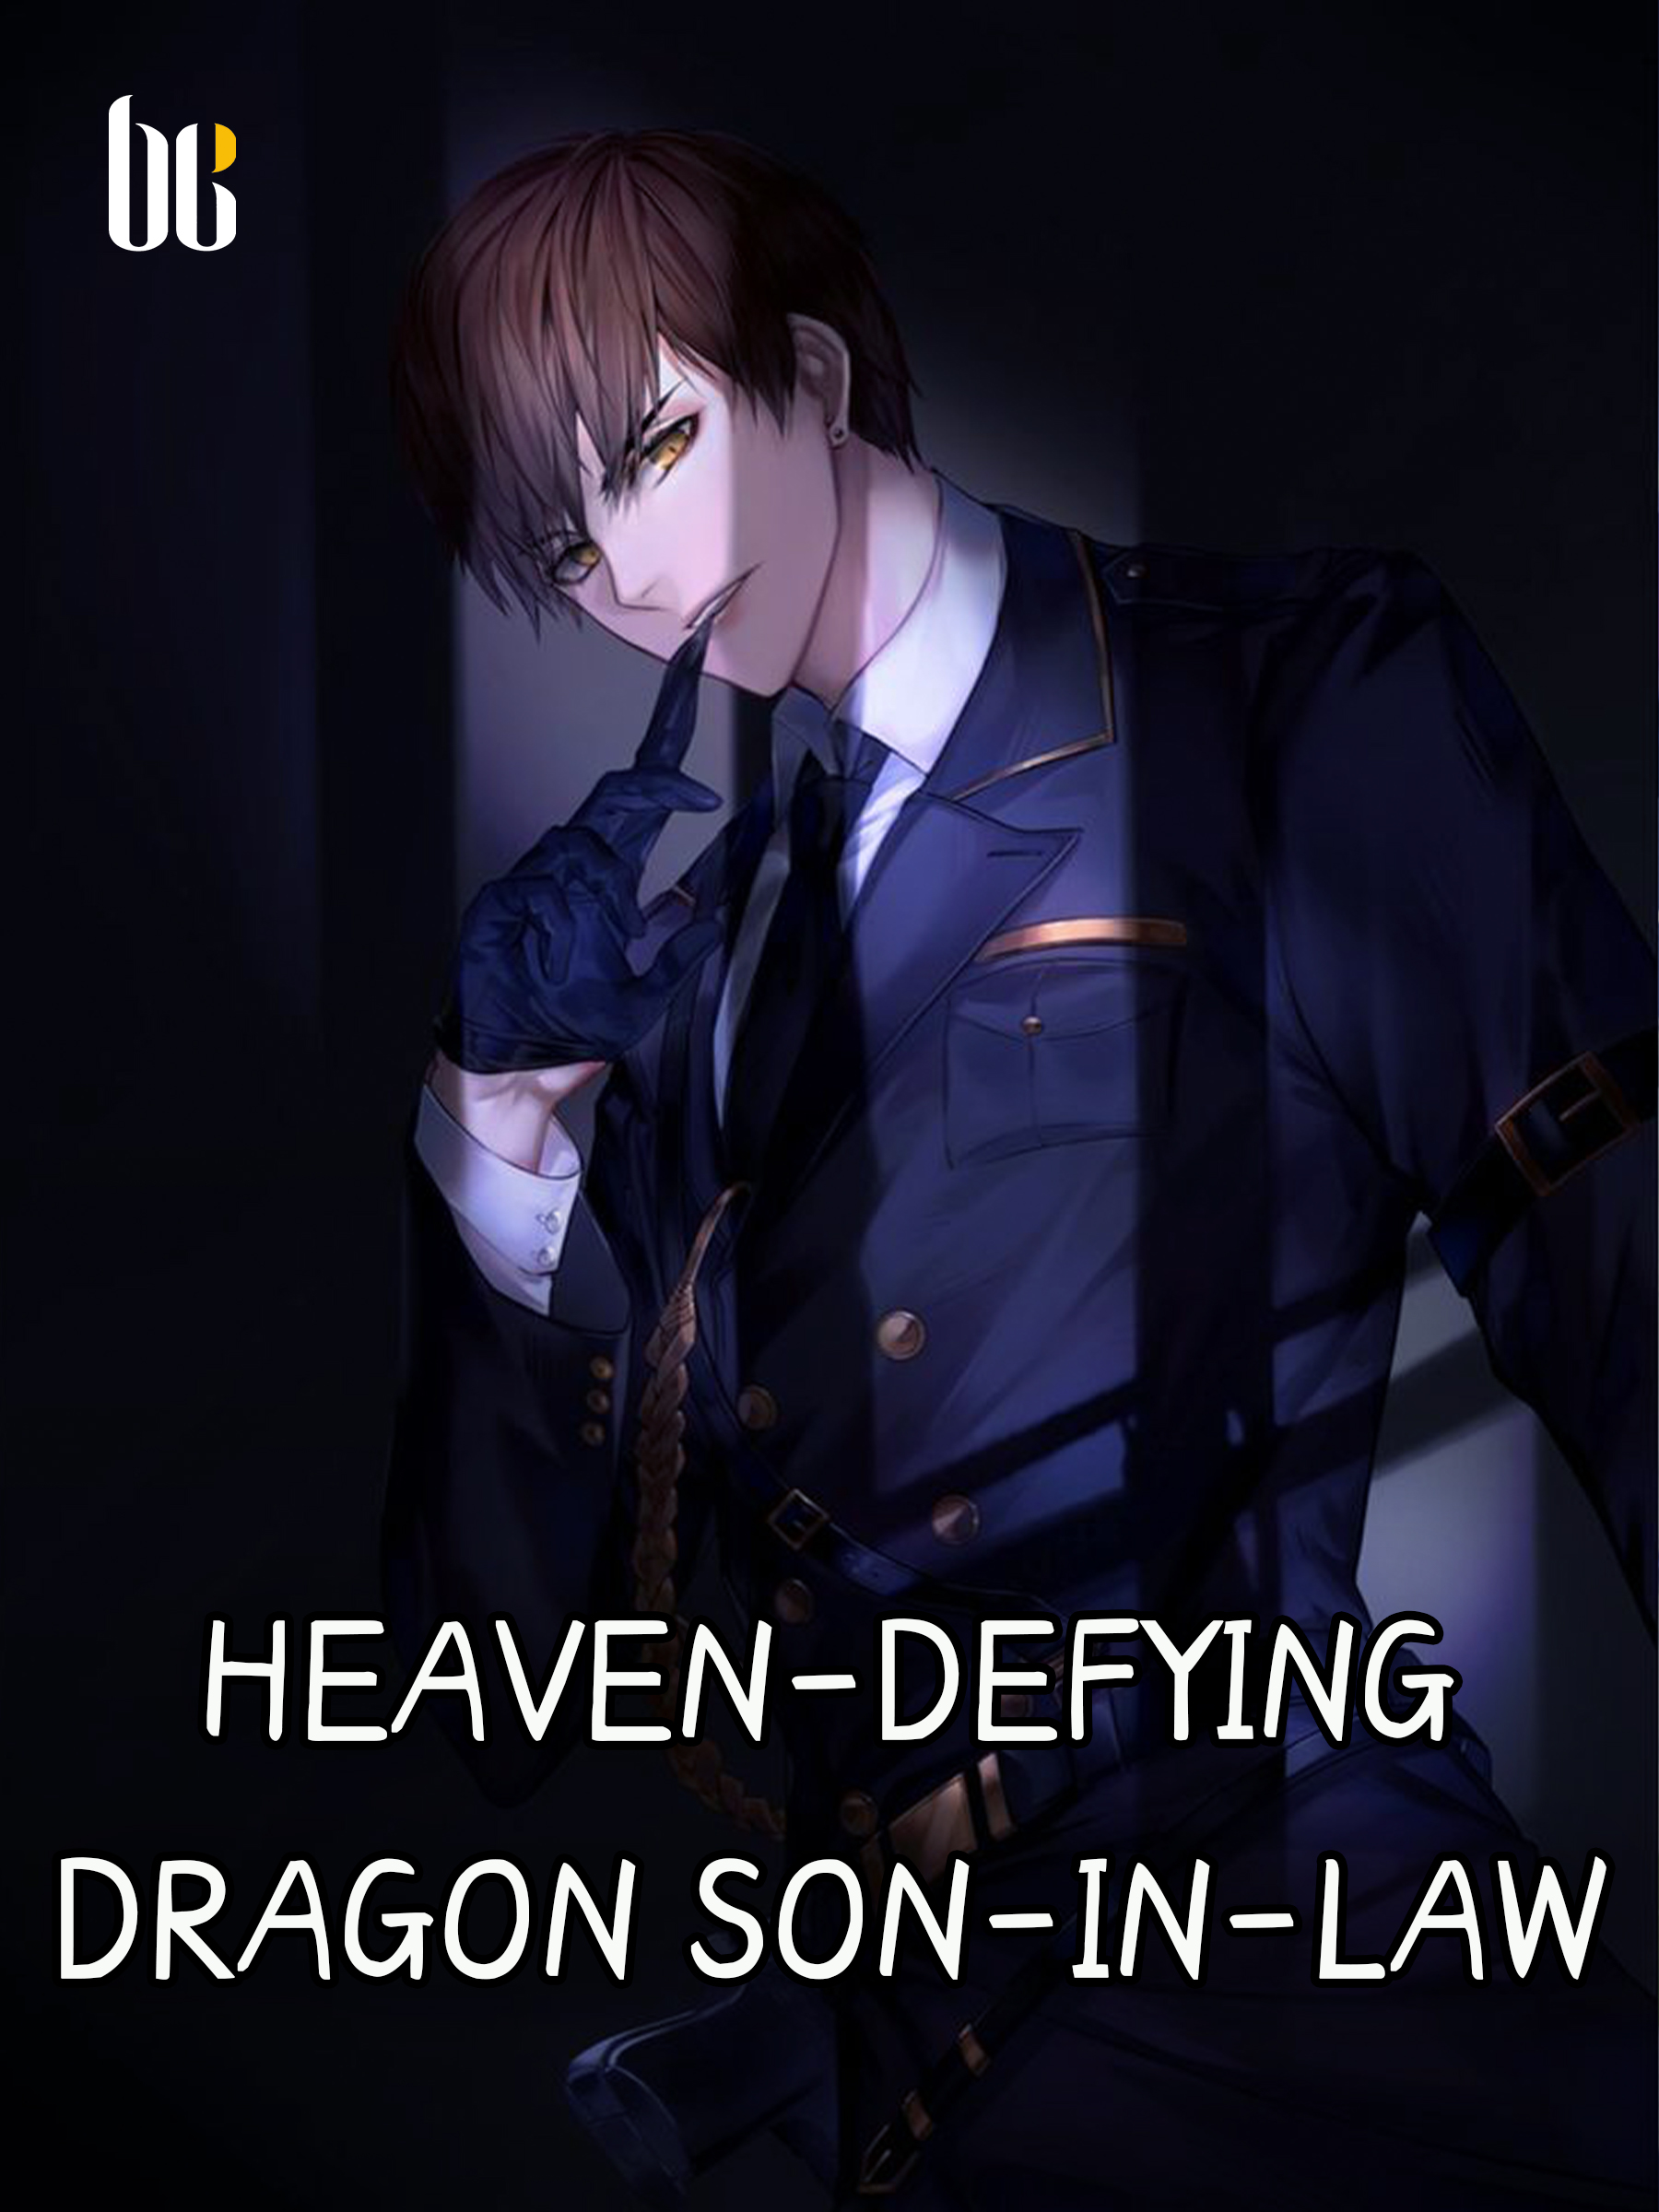 Dragon King s Son In Law Heaven-defying Dragon Son-in-law Novel Full Story | Book - BabelNovel